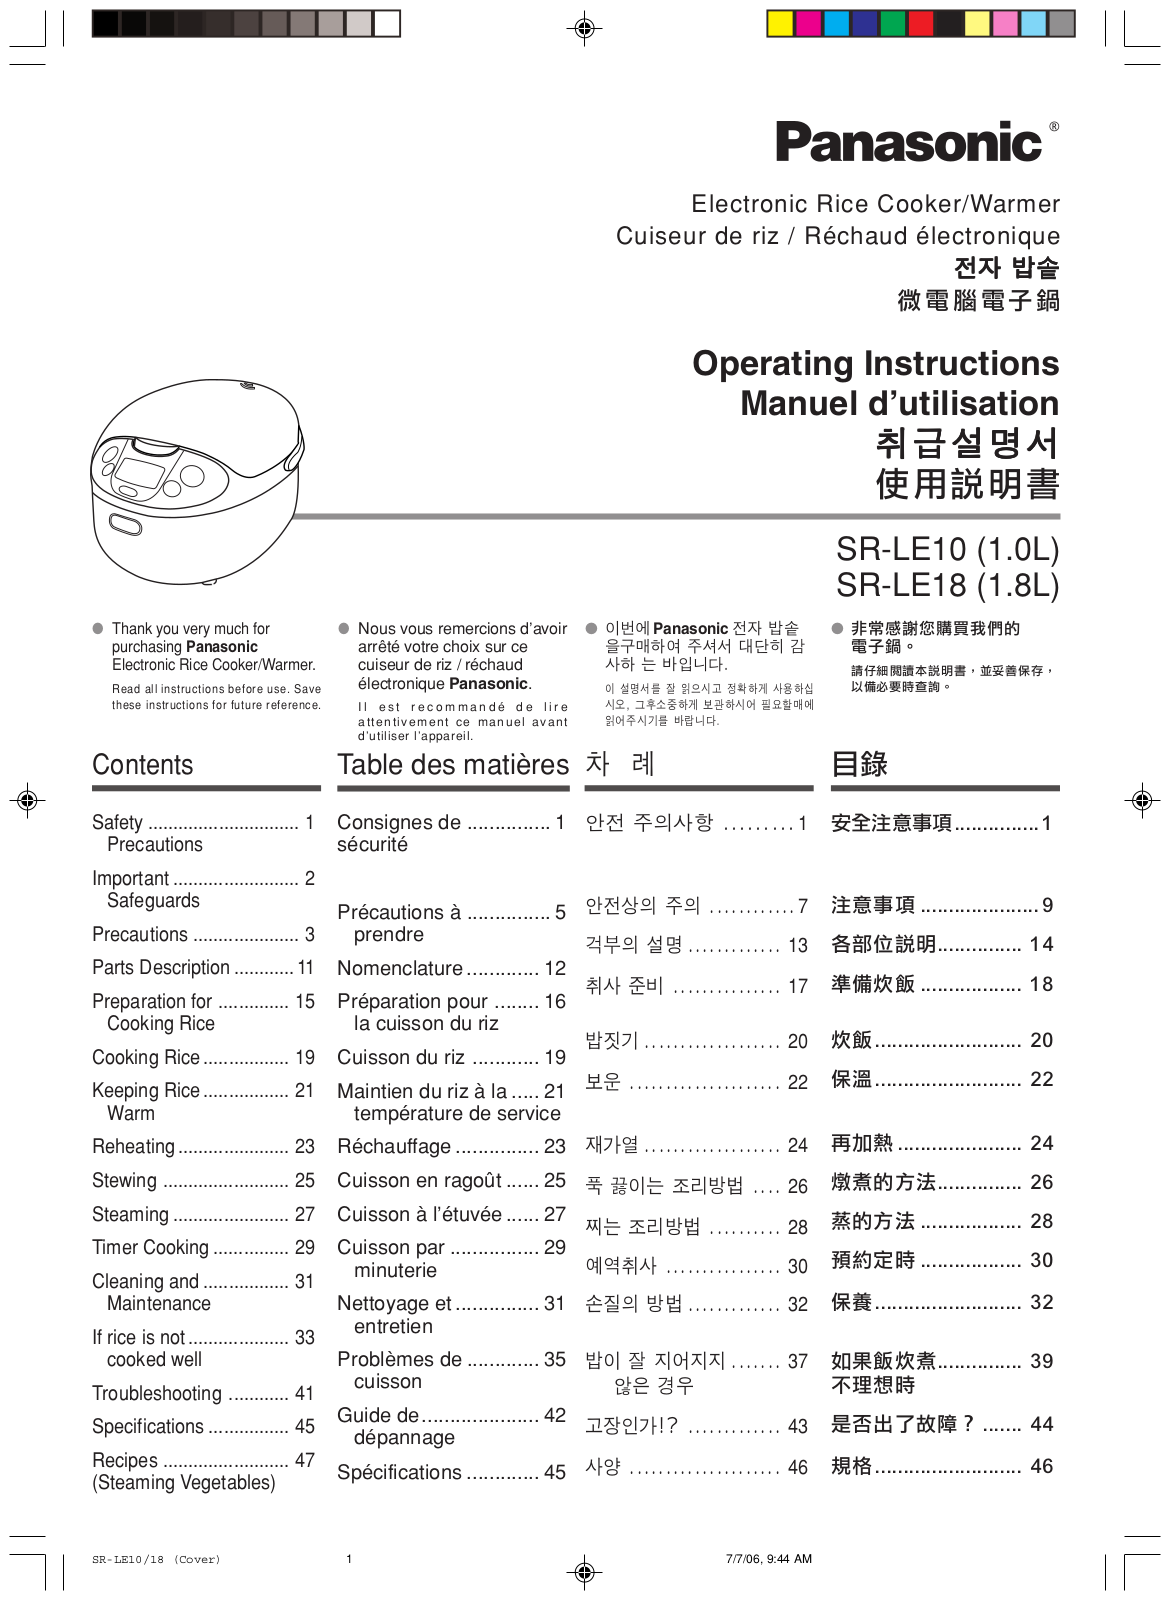 Panasonic sr-le10 Operation Manual